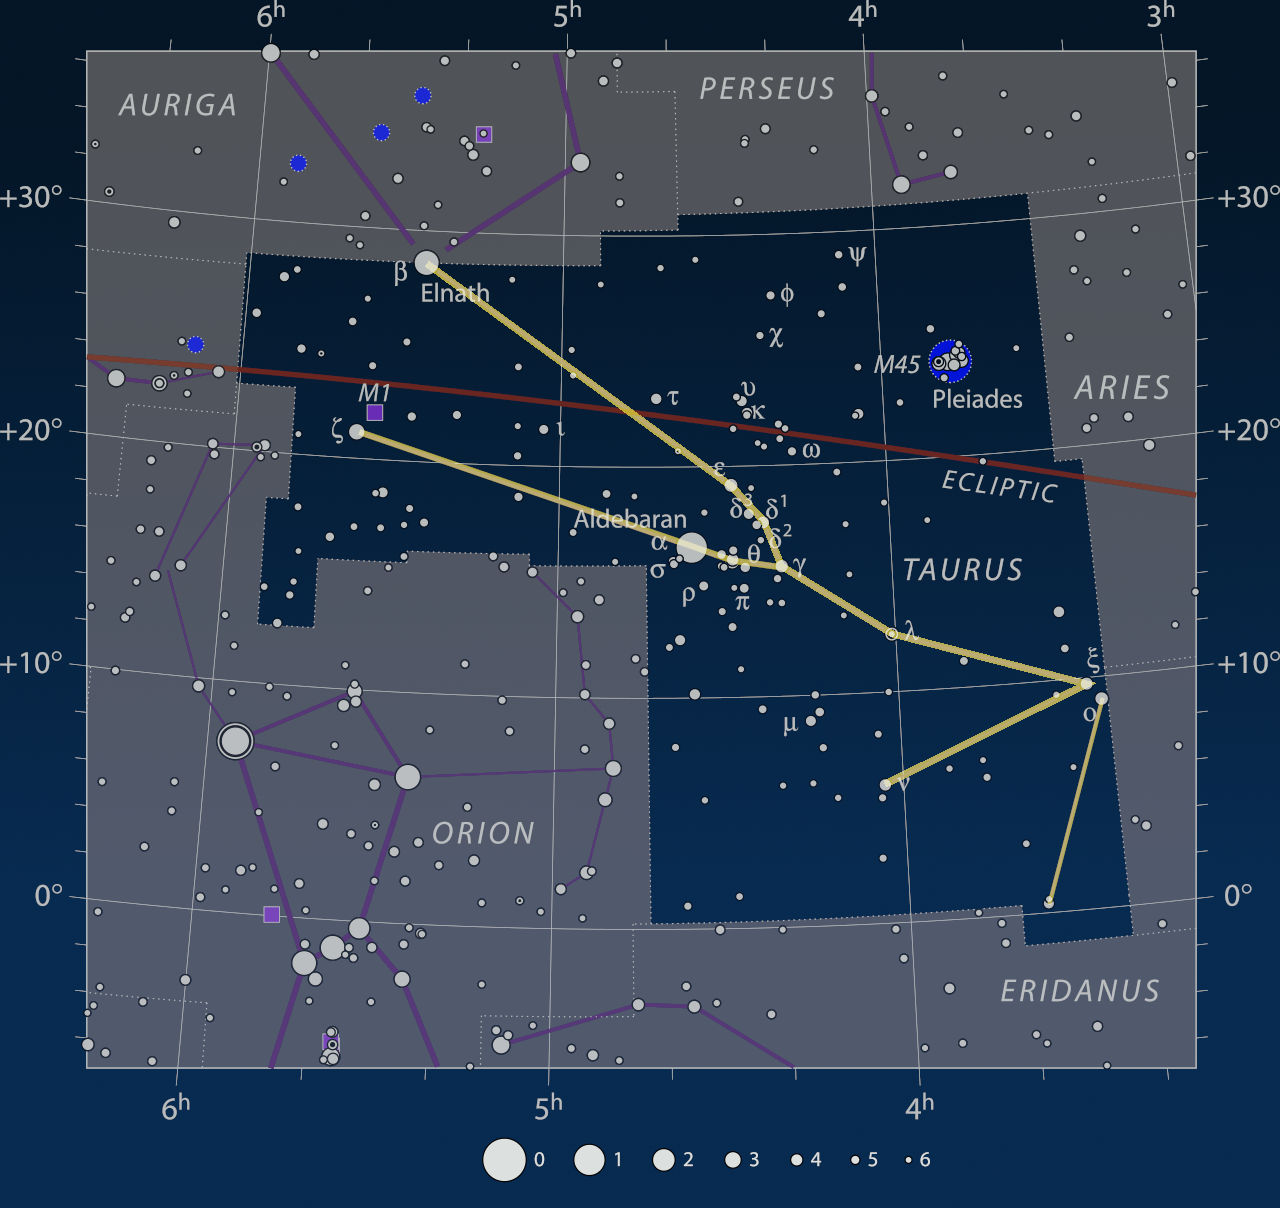 Taurus Constellation Stars Labeled